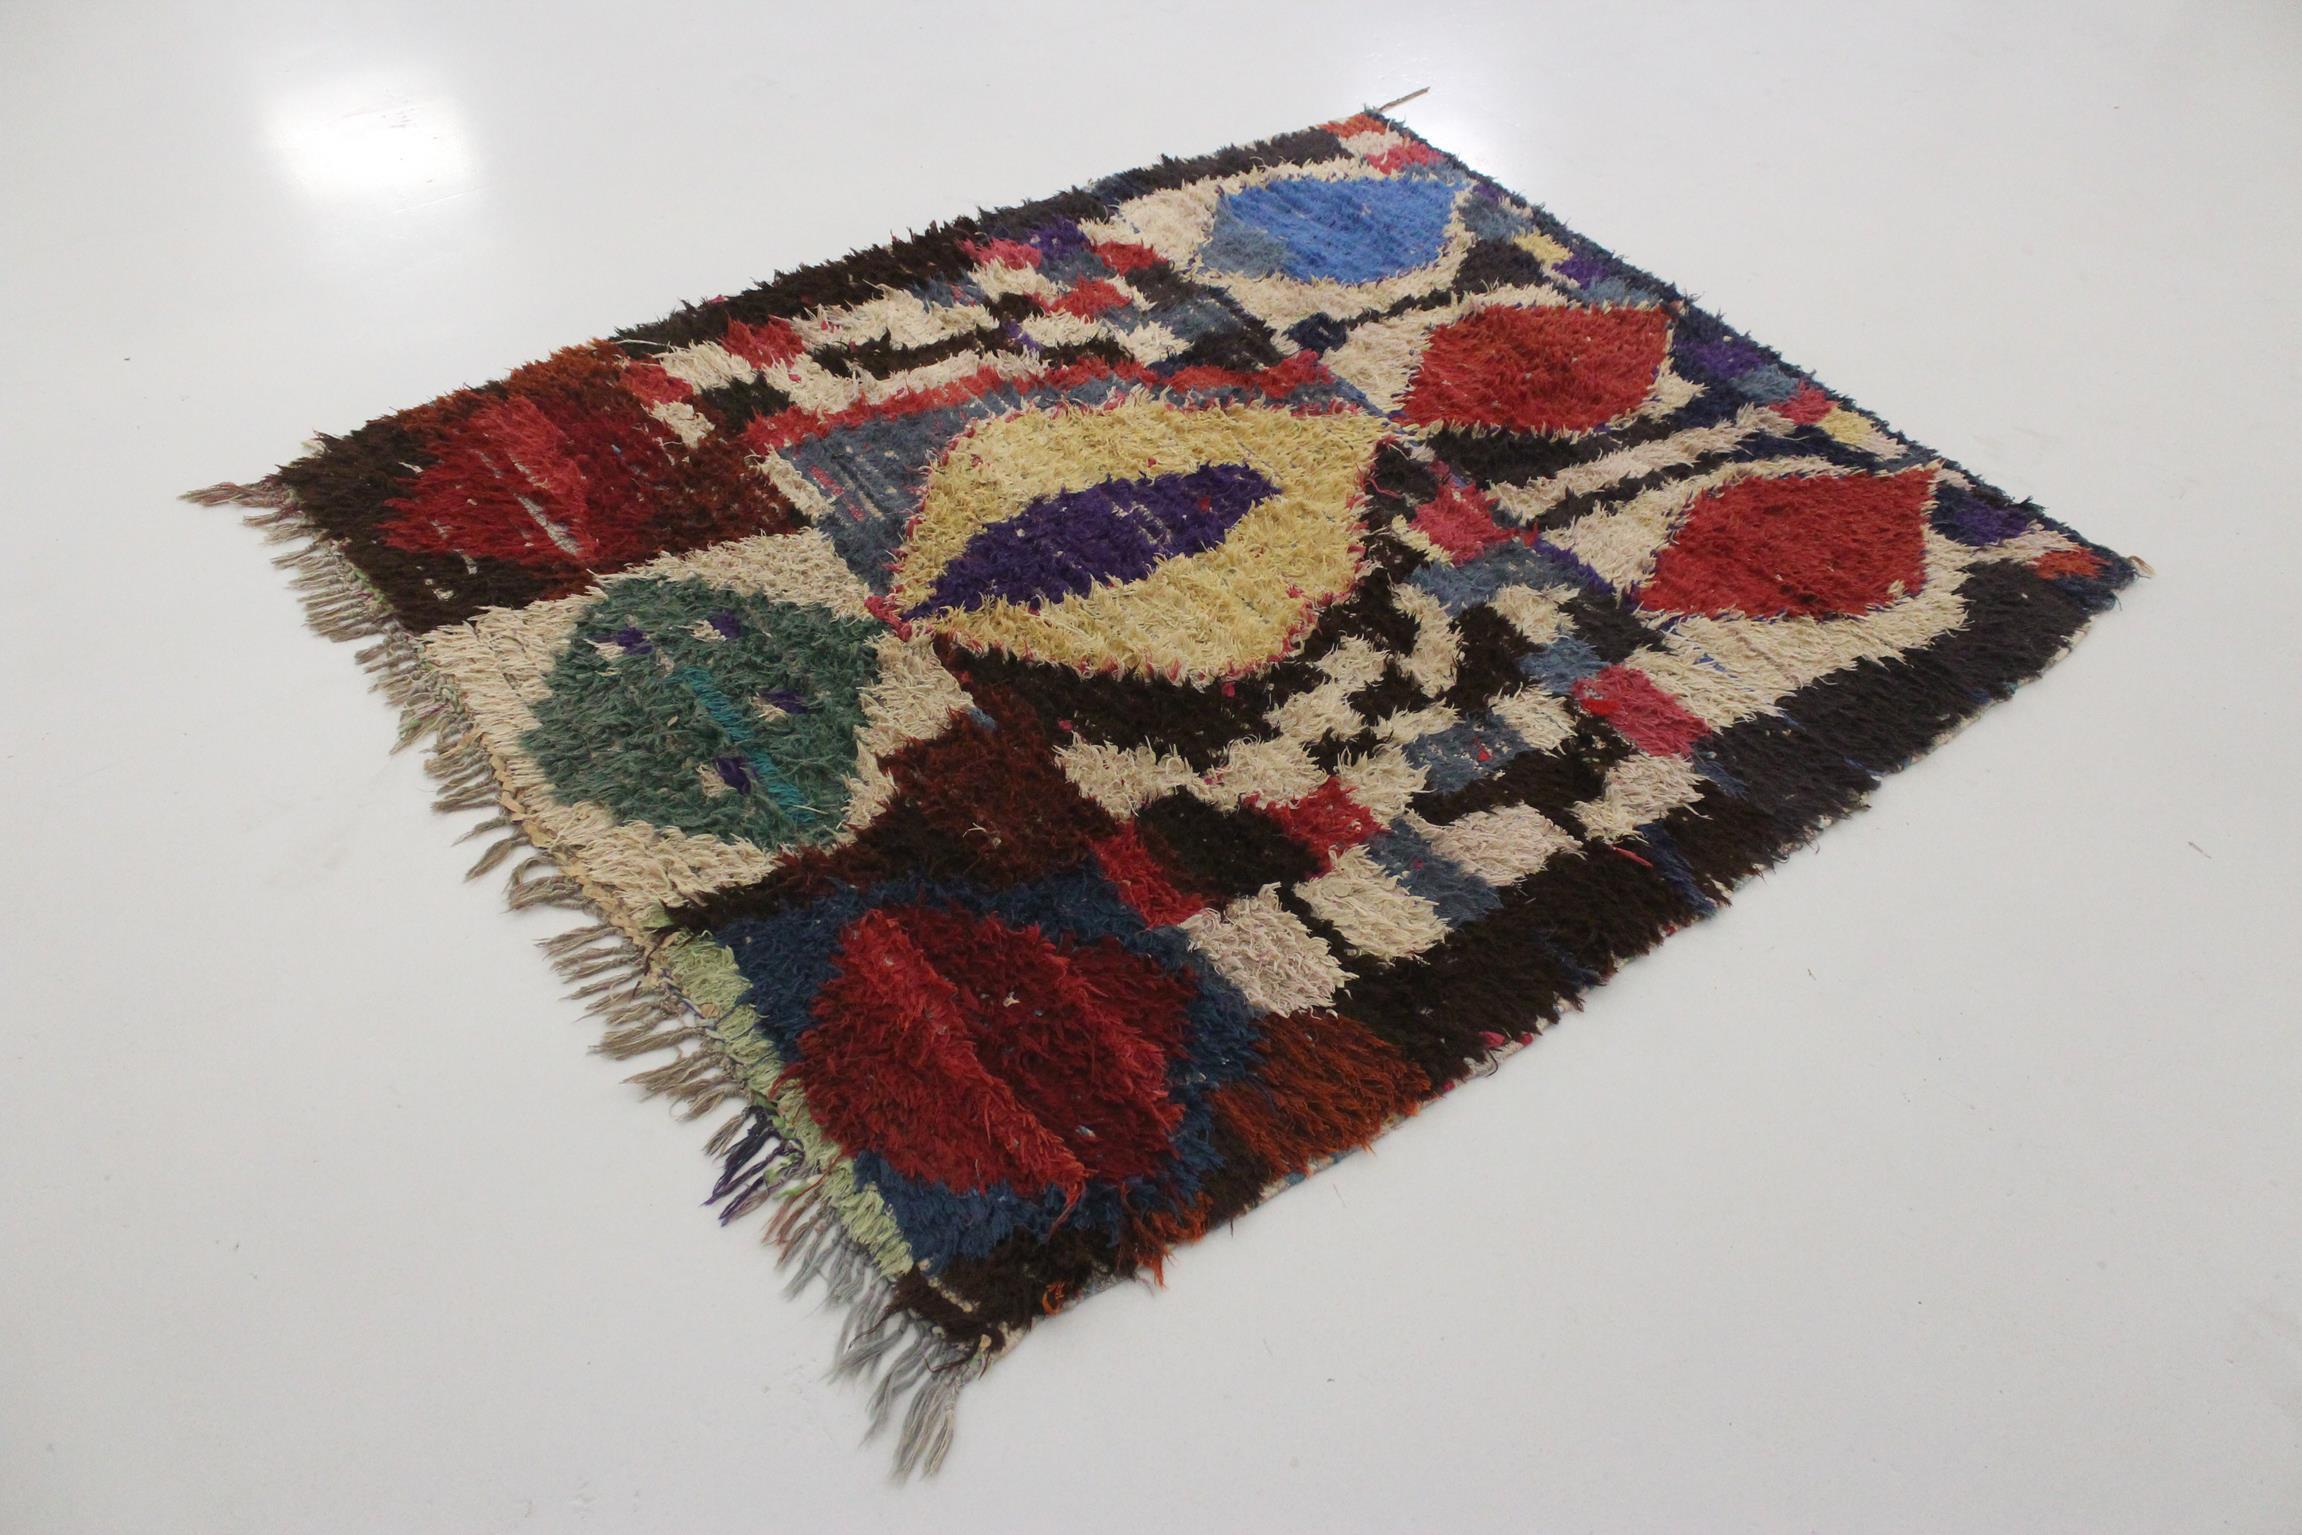 Hand-Woven Vintage Moroccan Boucherouite rug - Multicolor - 5x5.7feet / 154x175cm For Sale